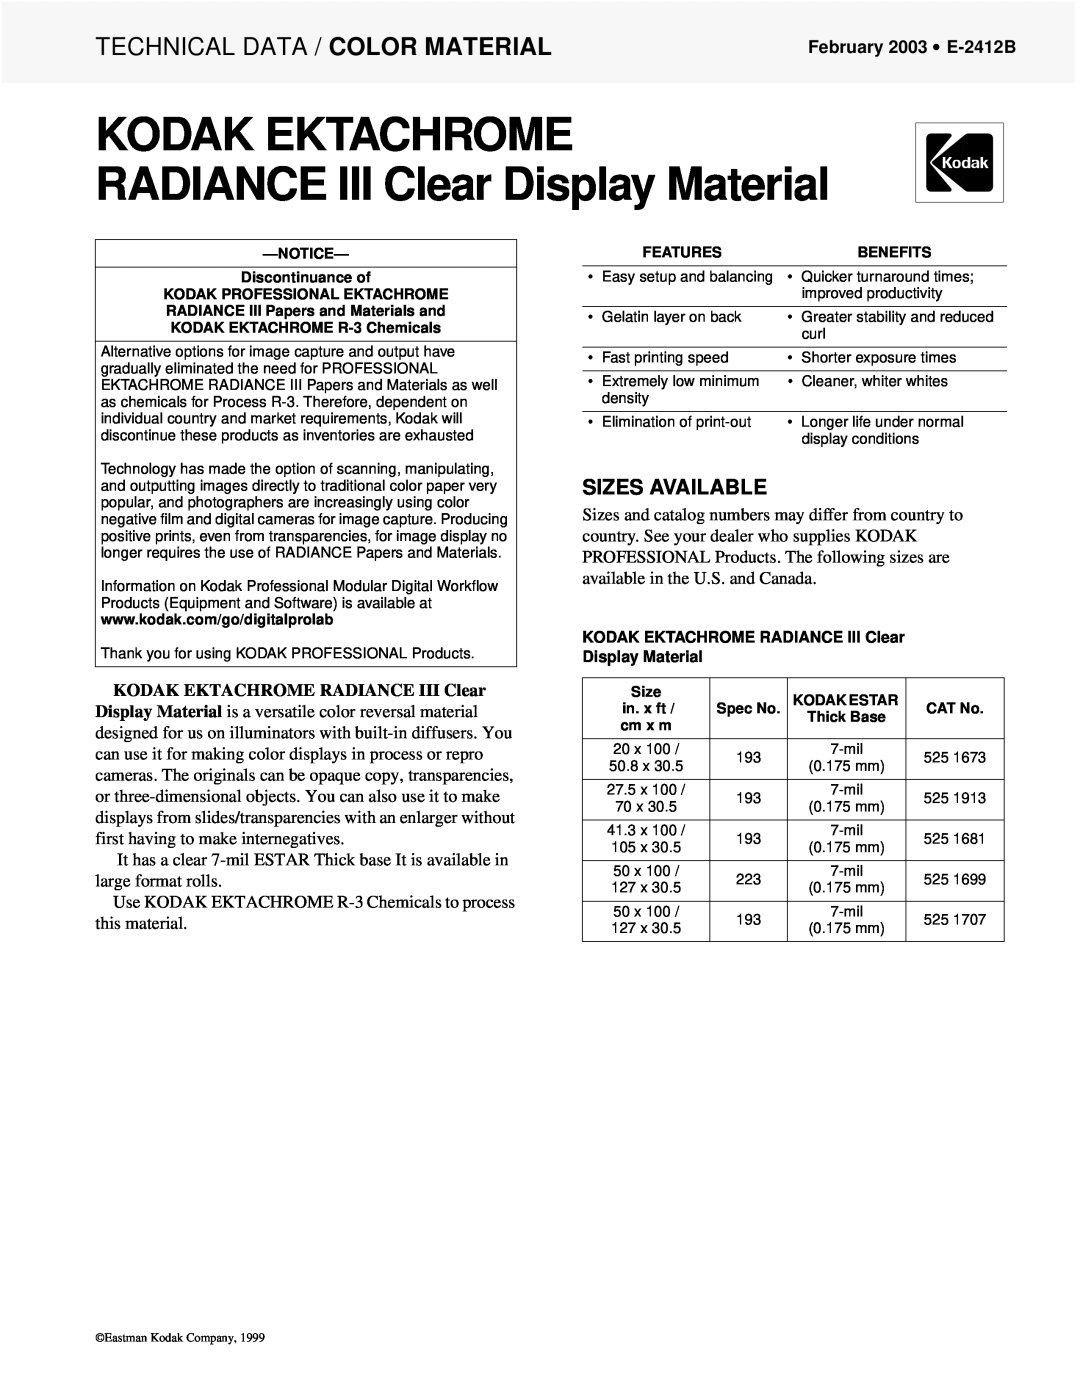 Furitechnics manual Sizes Available, KODAK EKTACHROME RADIANCE III Clear Display Material, February 2003 E-2412B 